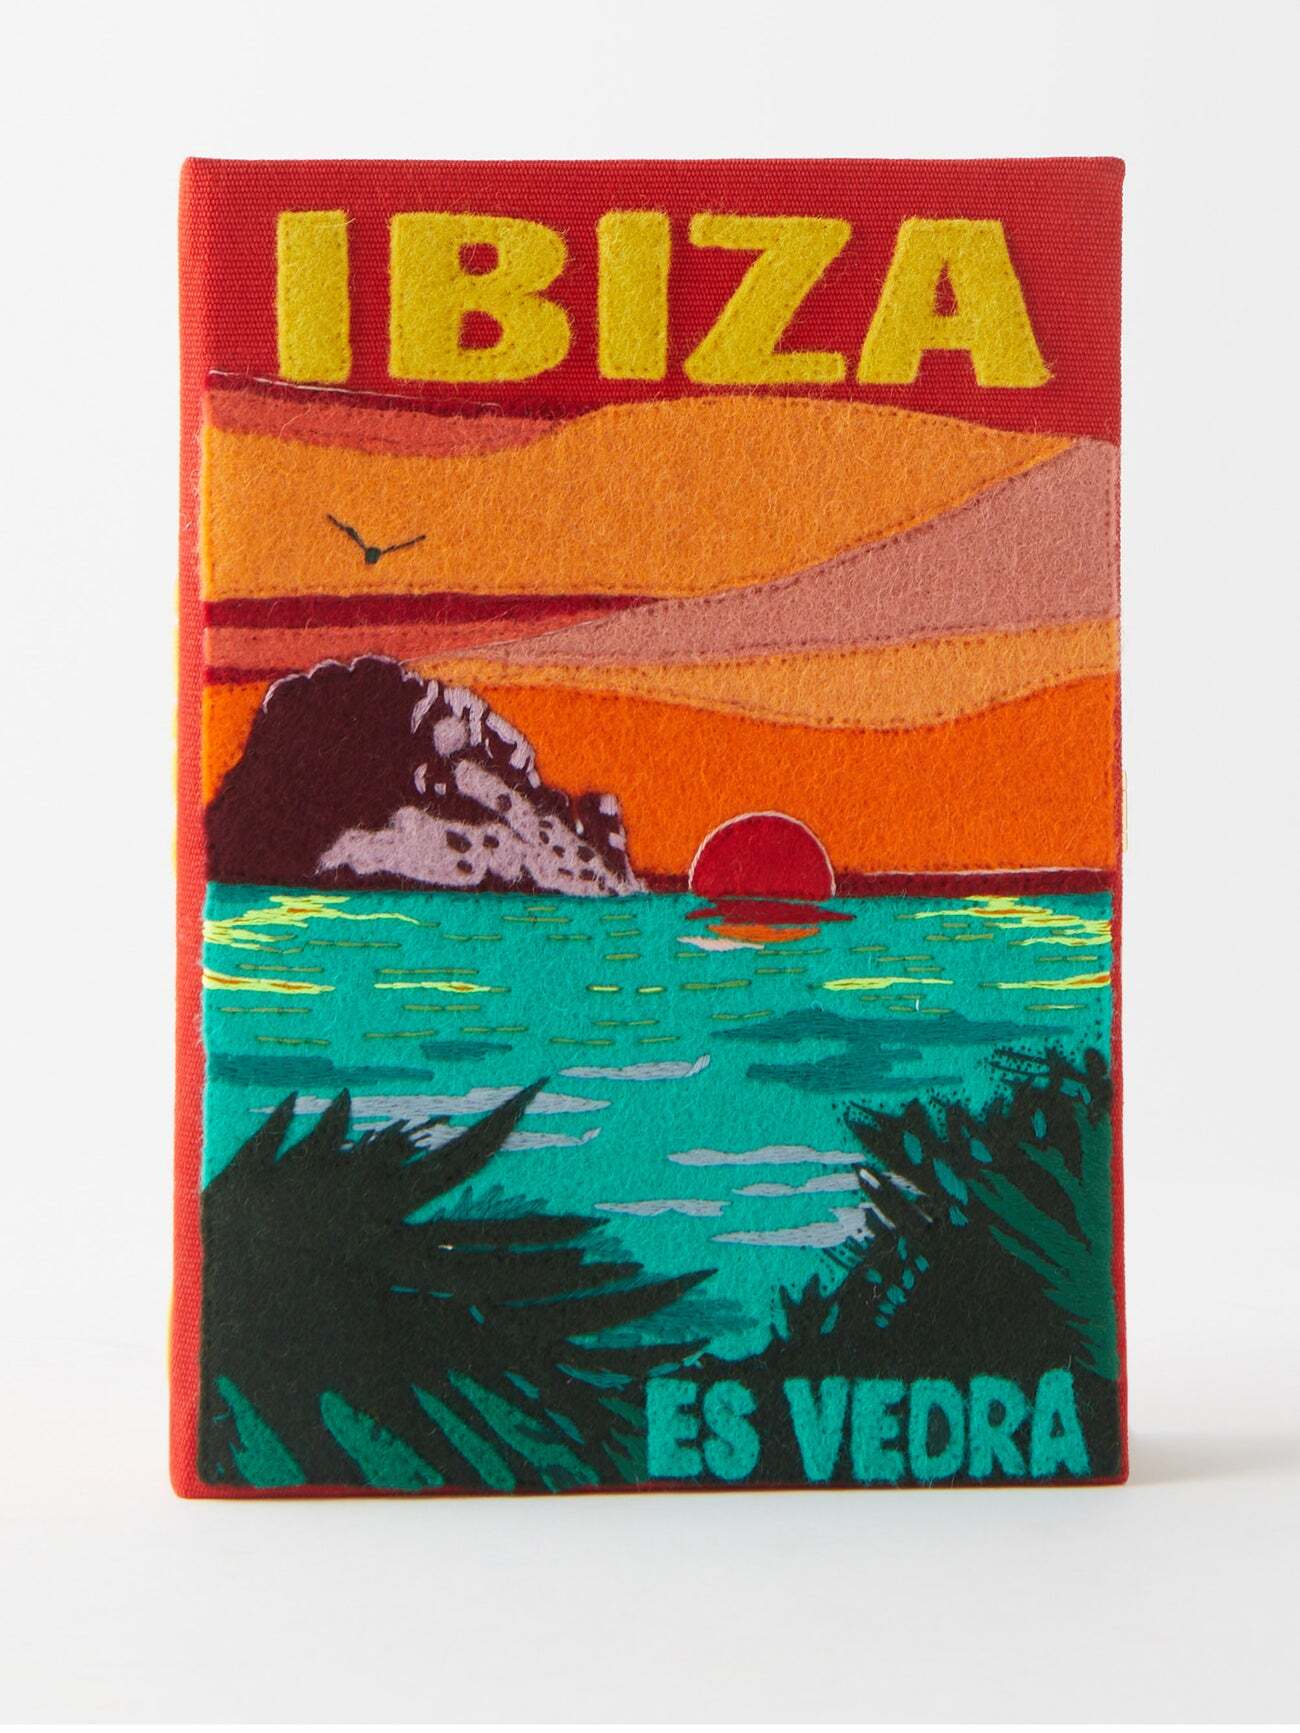 Olympia Le-tan - Ibiza Es Vedrà Embroidered Book Clutch Bag - Womens - Orange Multi